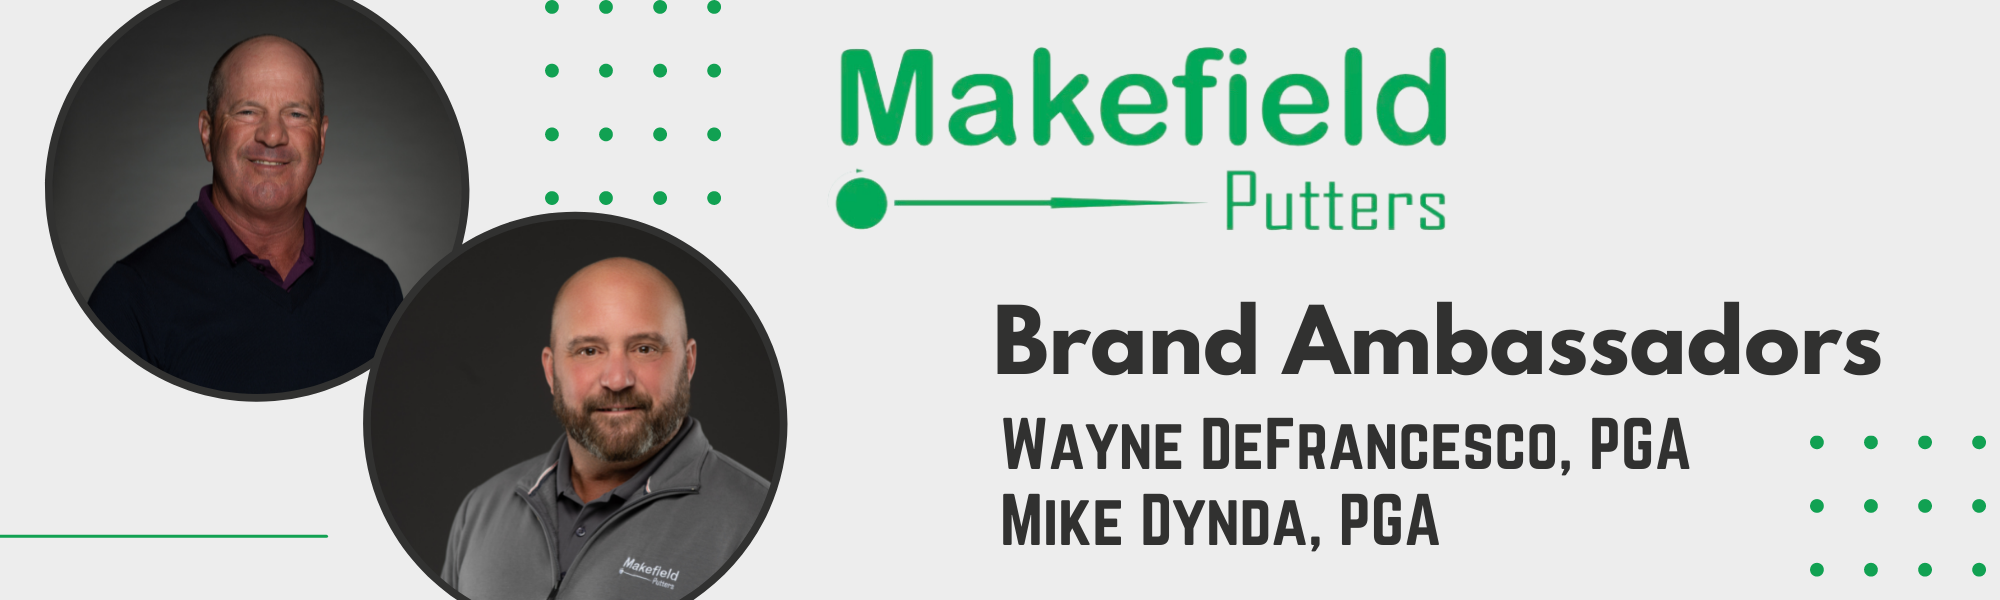 makefield-putters_brand-ambassadors_wayne-defrancesco-pga_mike-dynda-pga_linkedin-banner